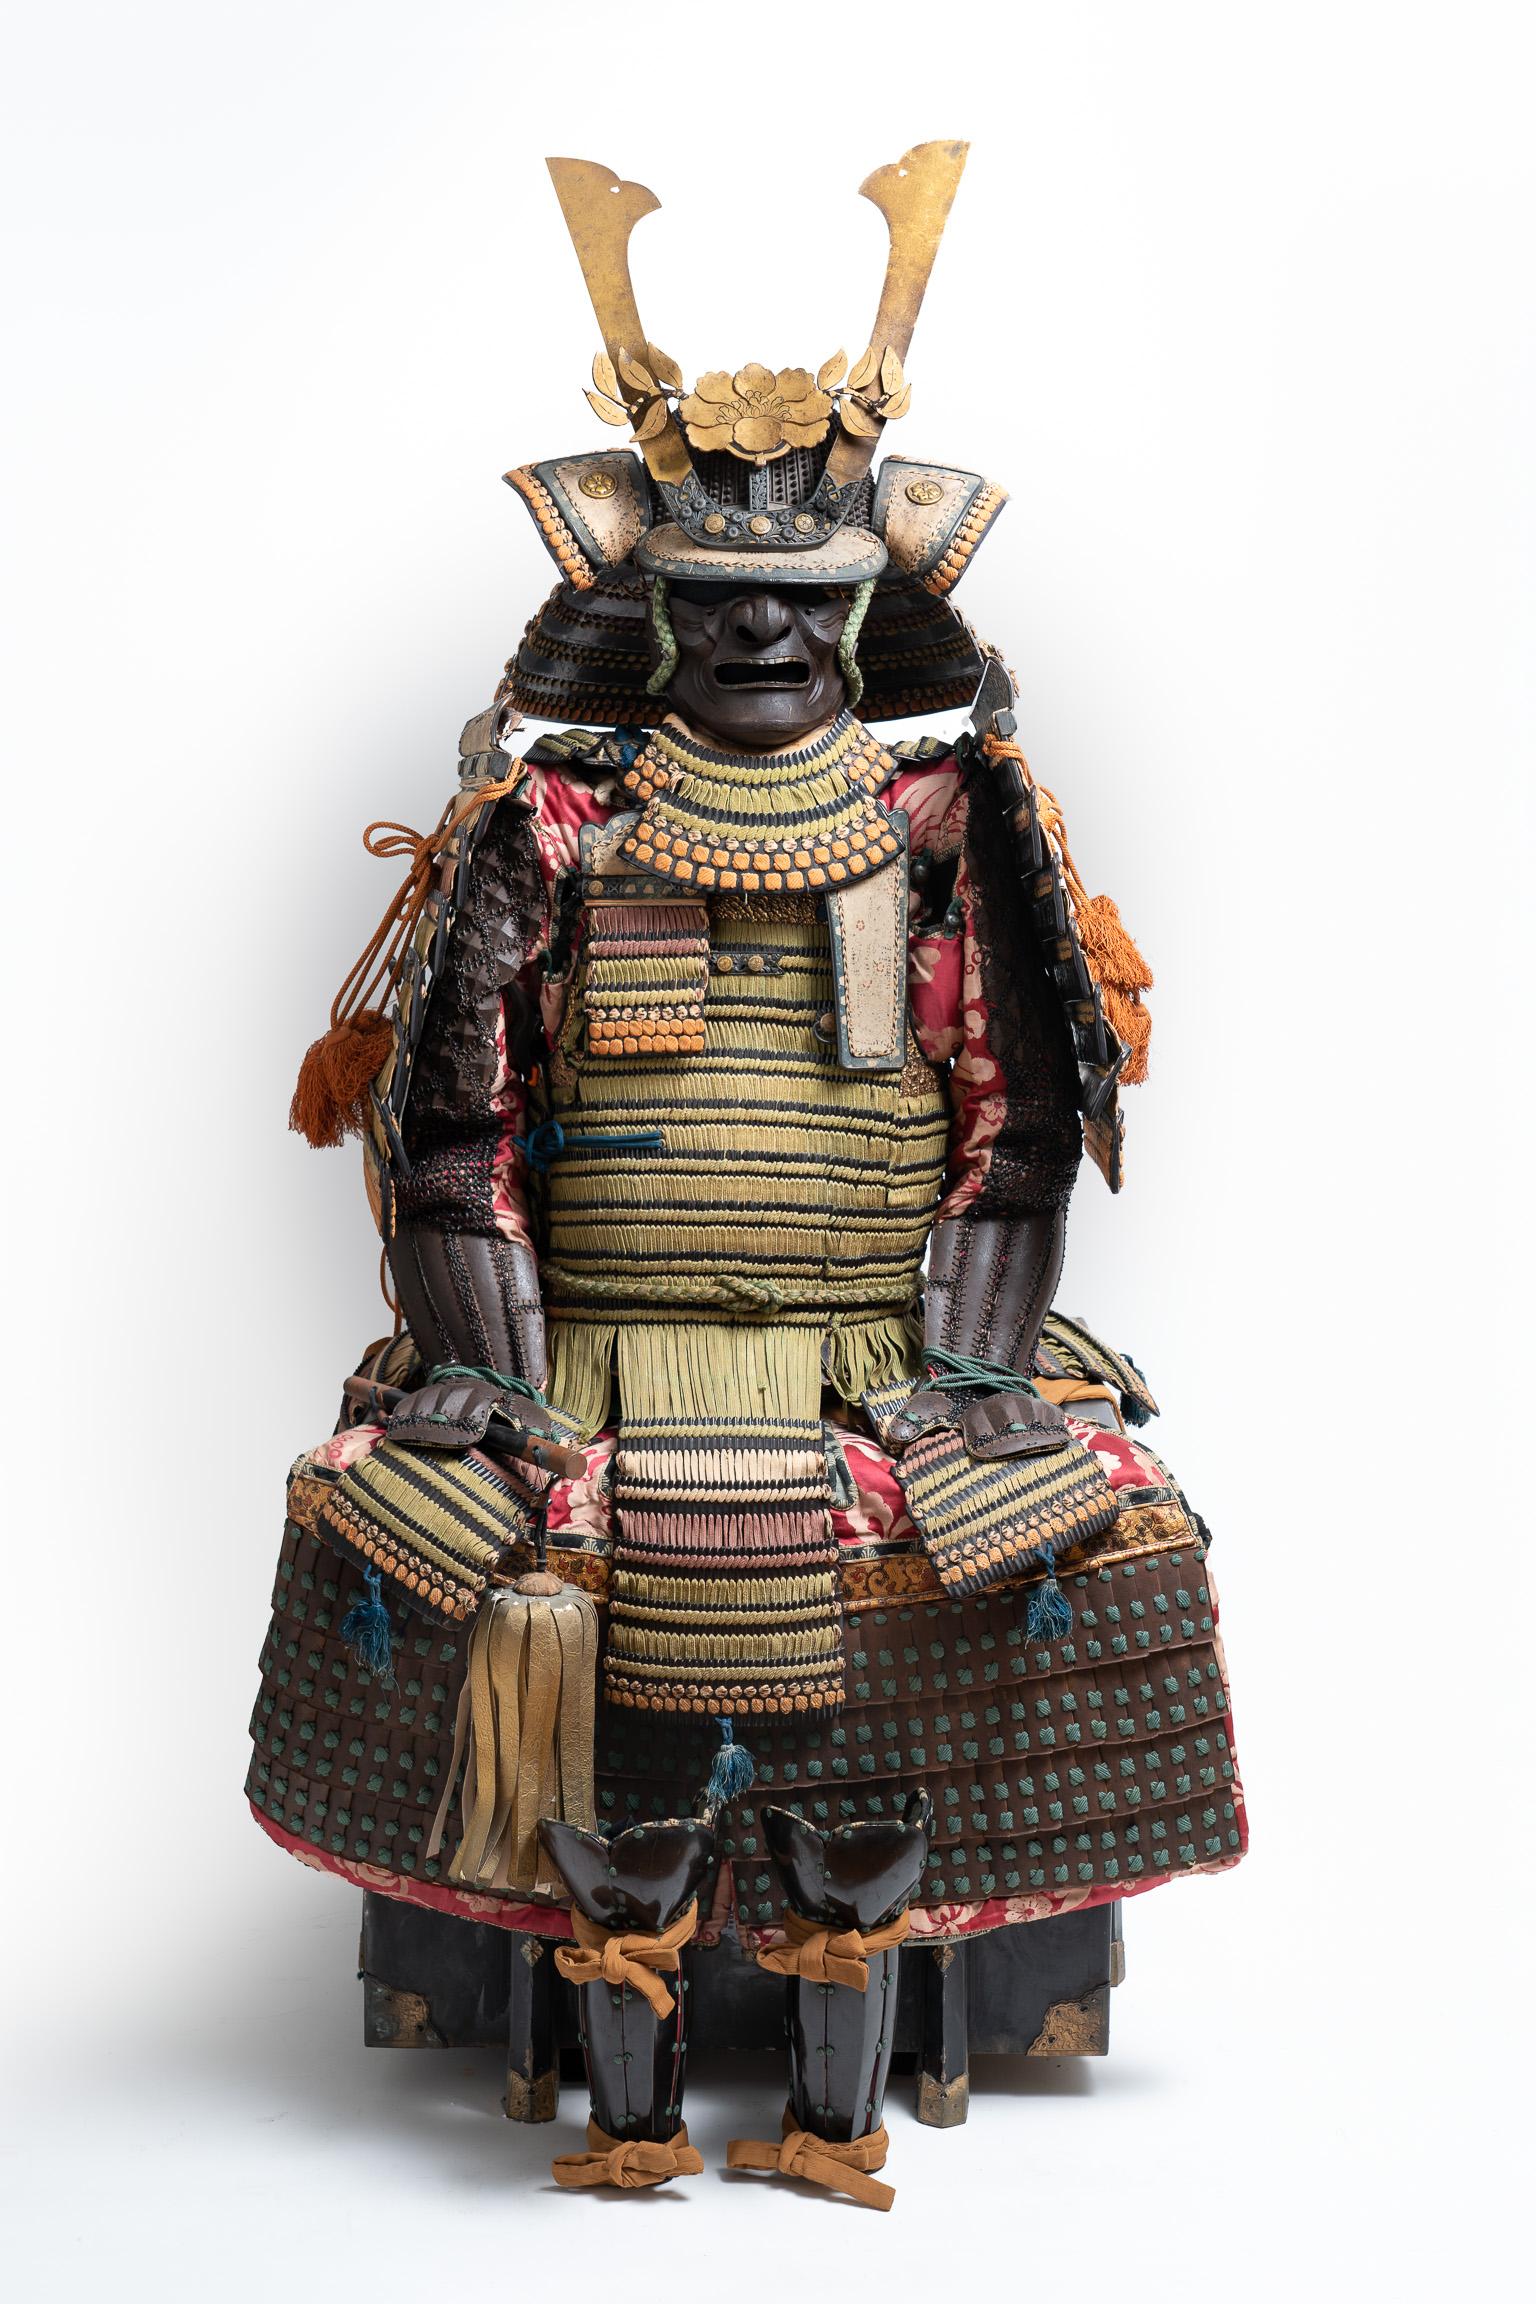 Hon-kozane ni-mai do tosei gusoku
Samurai-Rüstung im Revival-Stil

Edo-Periode,  17. bis 18. Jahrhundert

Unterschrift auf dem kabuto: Jōshū jū Saotome Ietada

 

Kabuto [Helm]: Ein Kabuto aus rostrotem Eisen (tetsu sabiji) mit zweiundsechzig